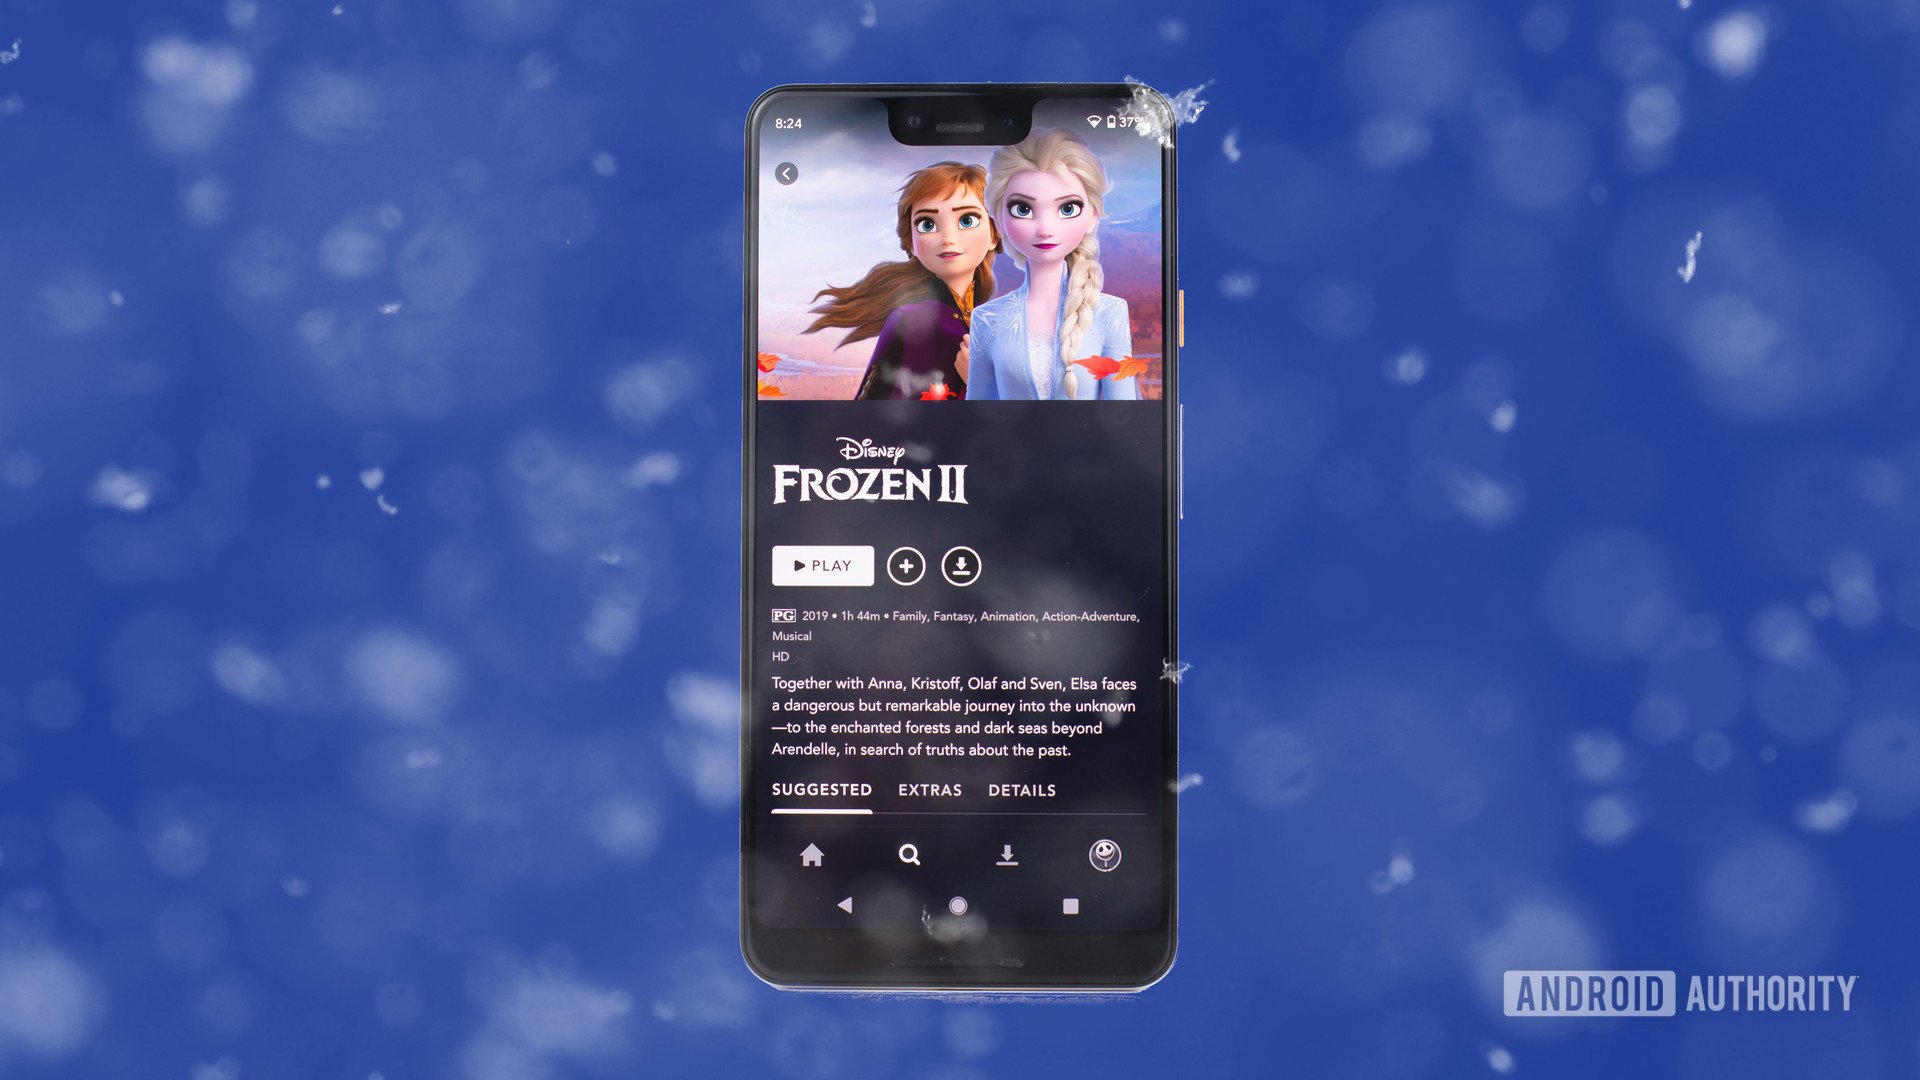 Frozen 2 on Disney Plus app with blue background 1